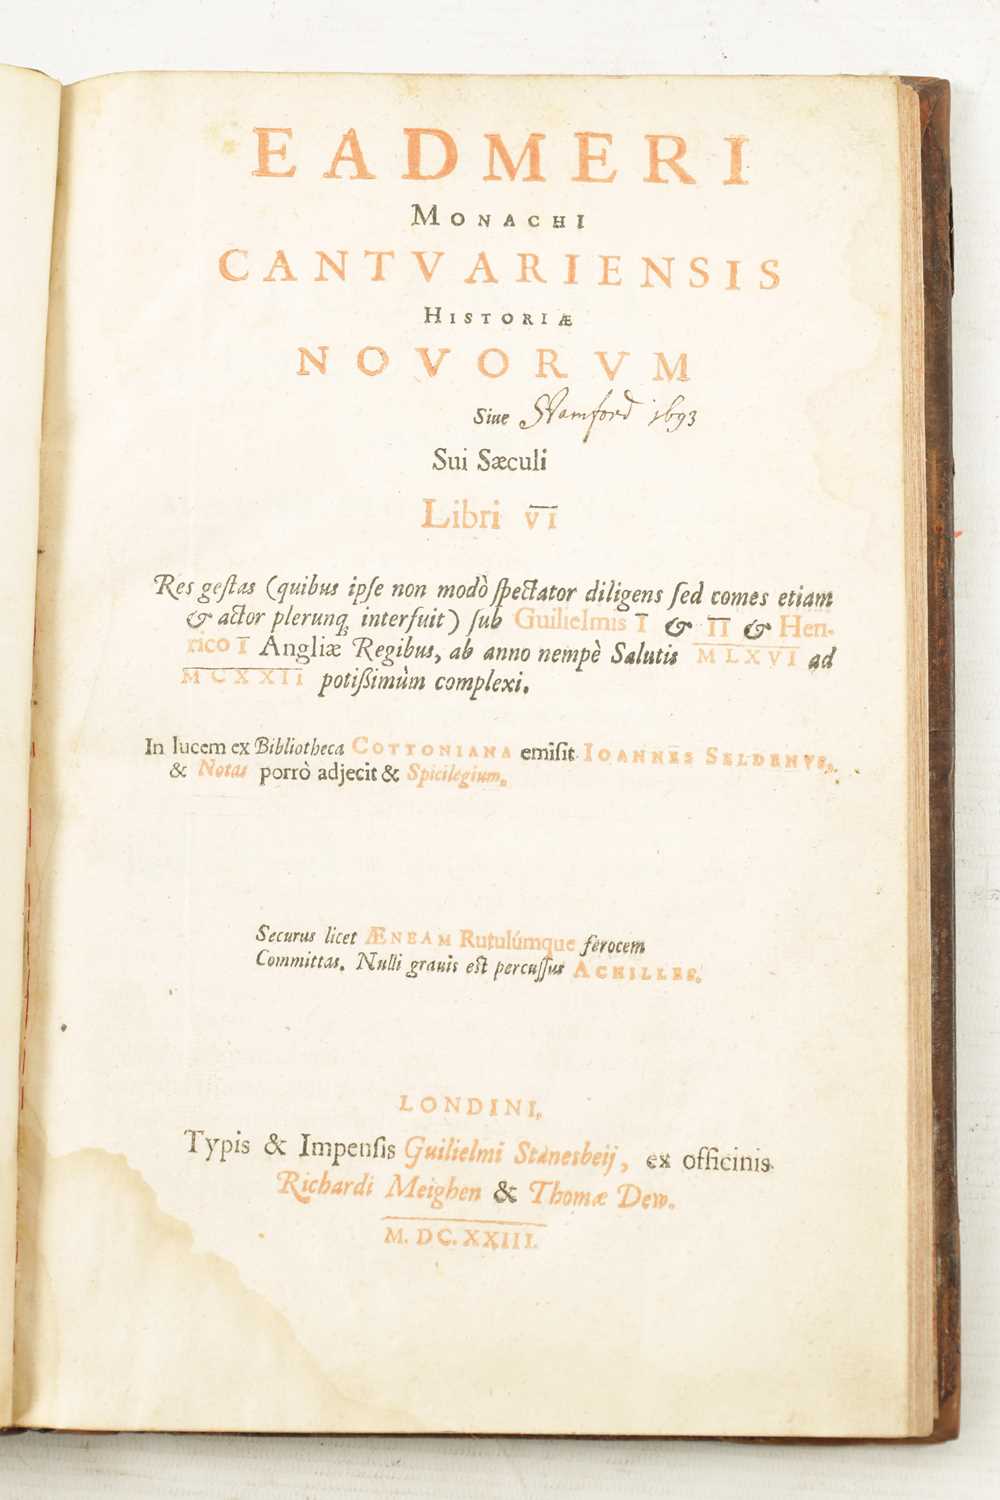 'EADMER OF CANTERBURY' A 17TH CENTURY LEATHER BOUND BOOK TITLED 'EADMERI MONACHI CANTUARIENSIS HISTO - Image 4 of 6